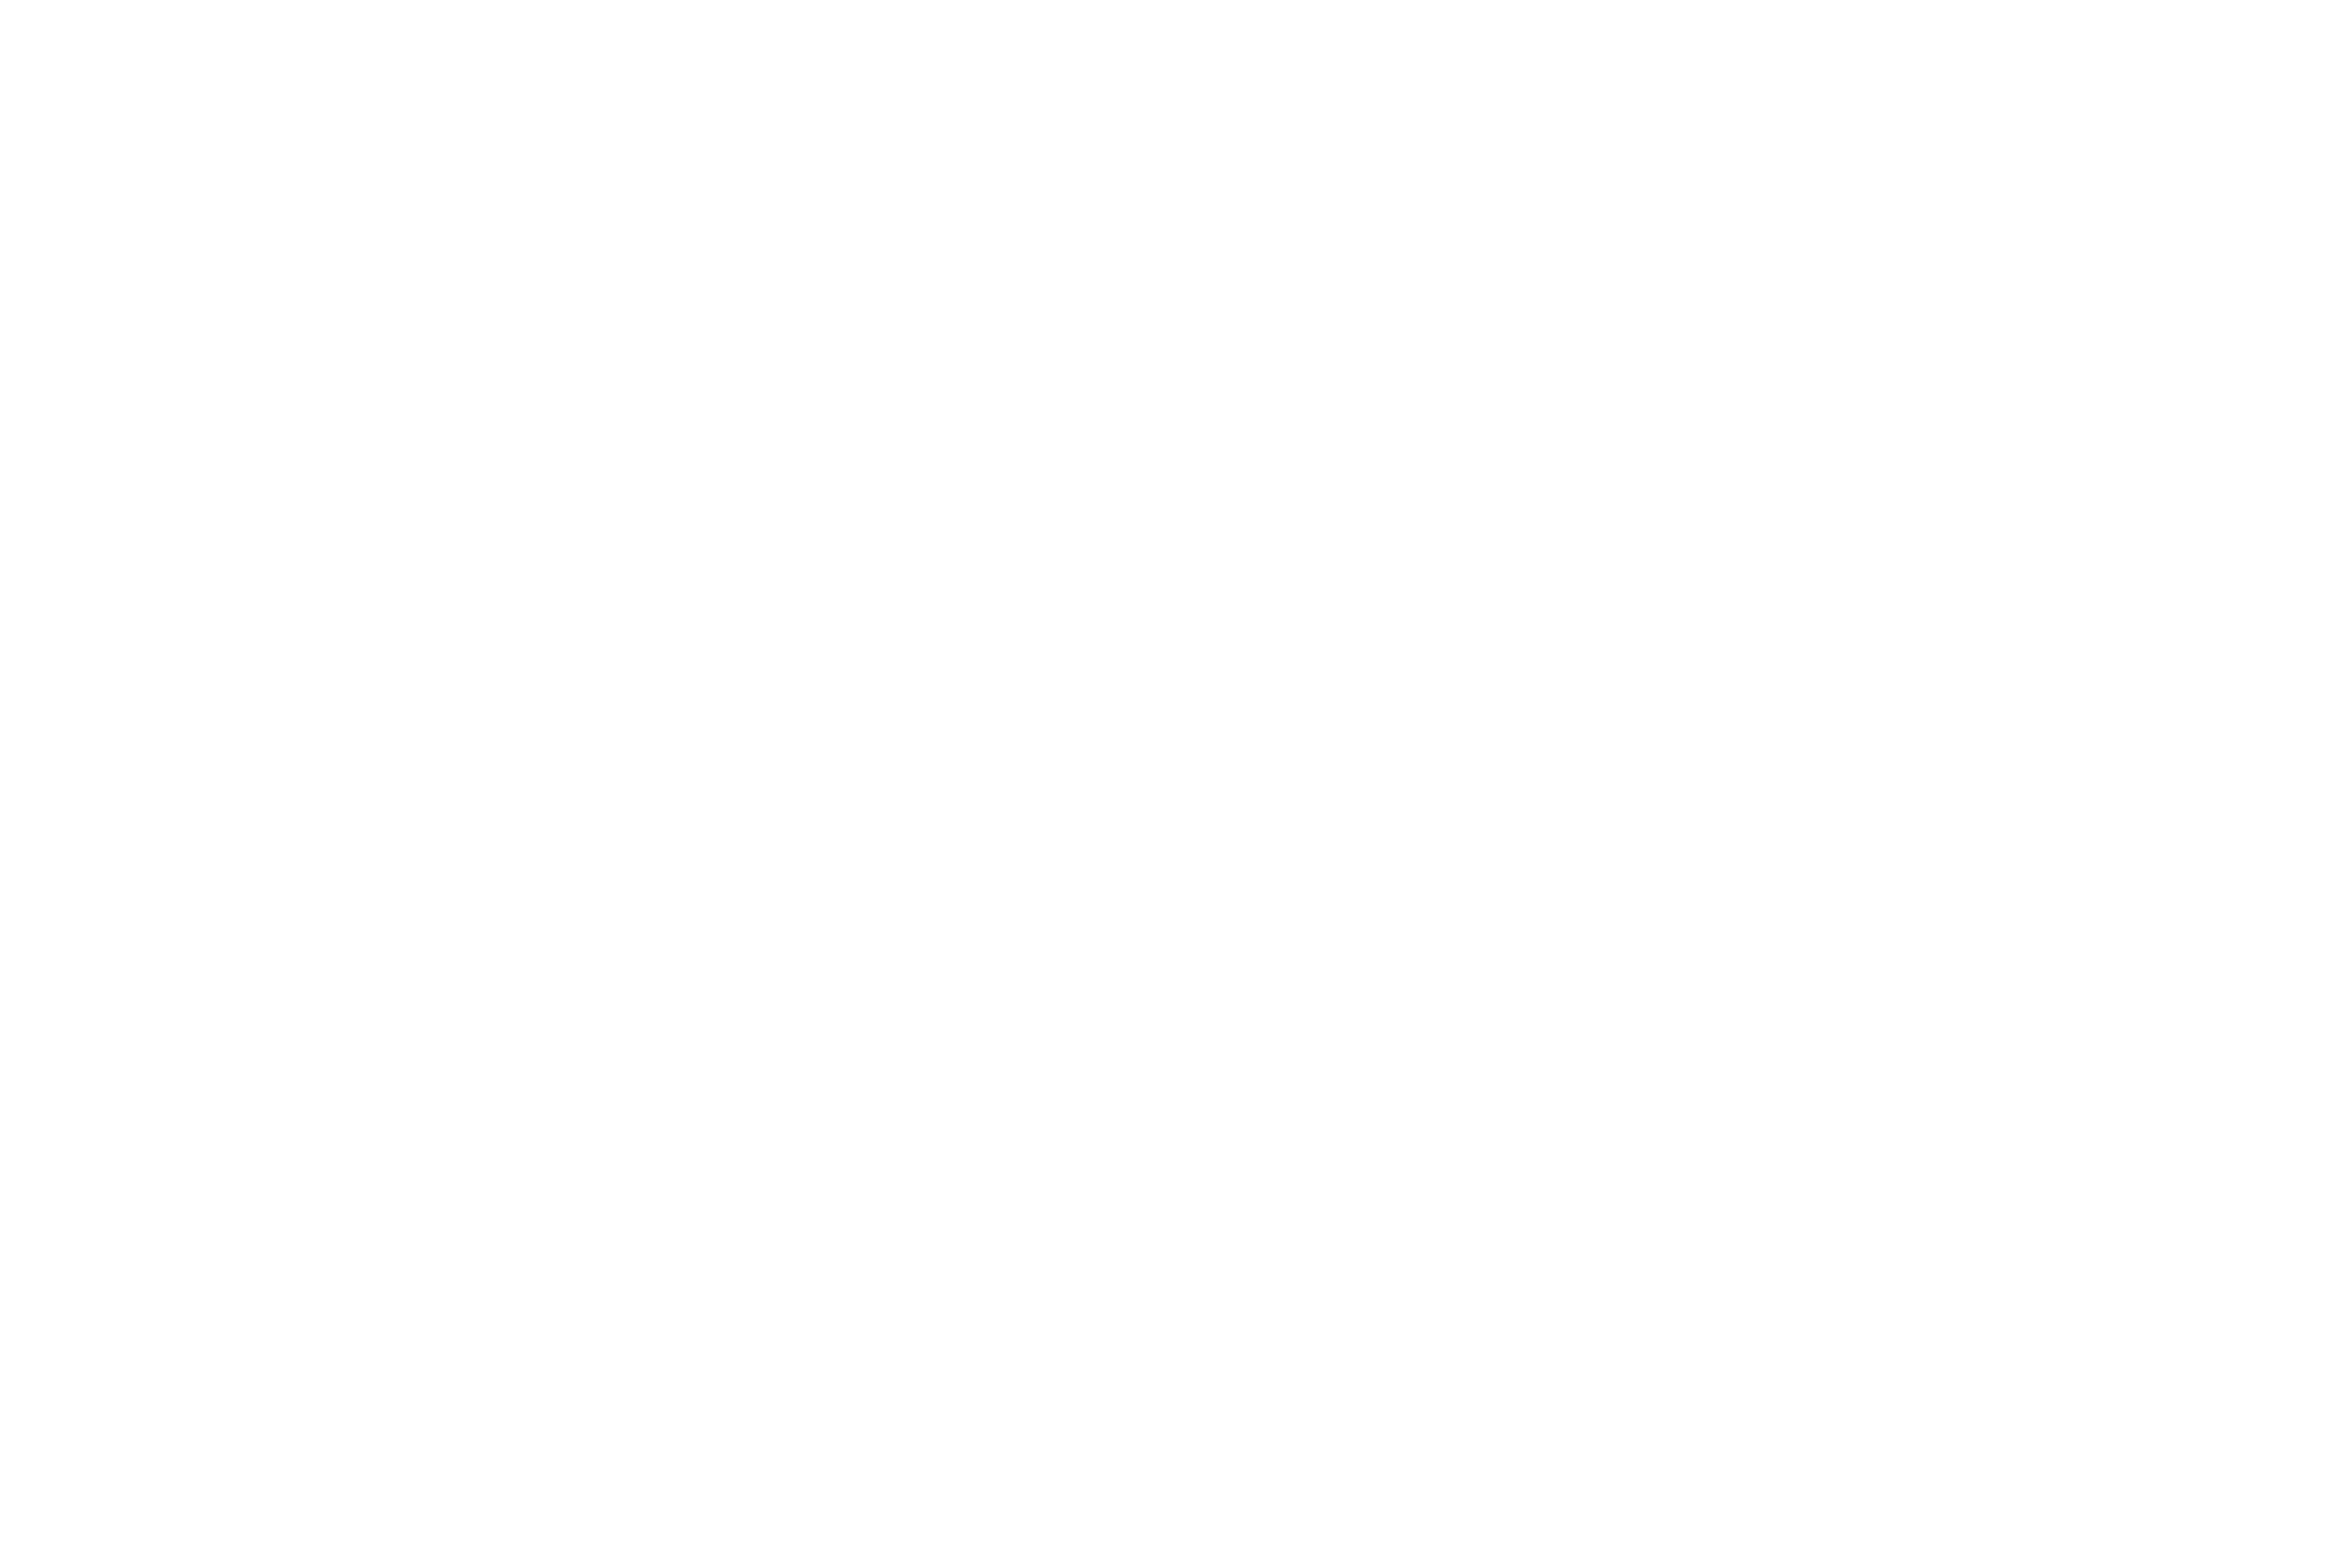 Trevor Baron